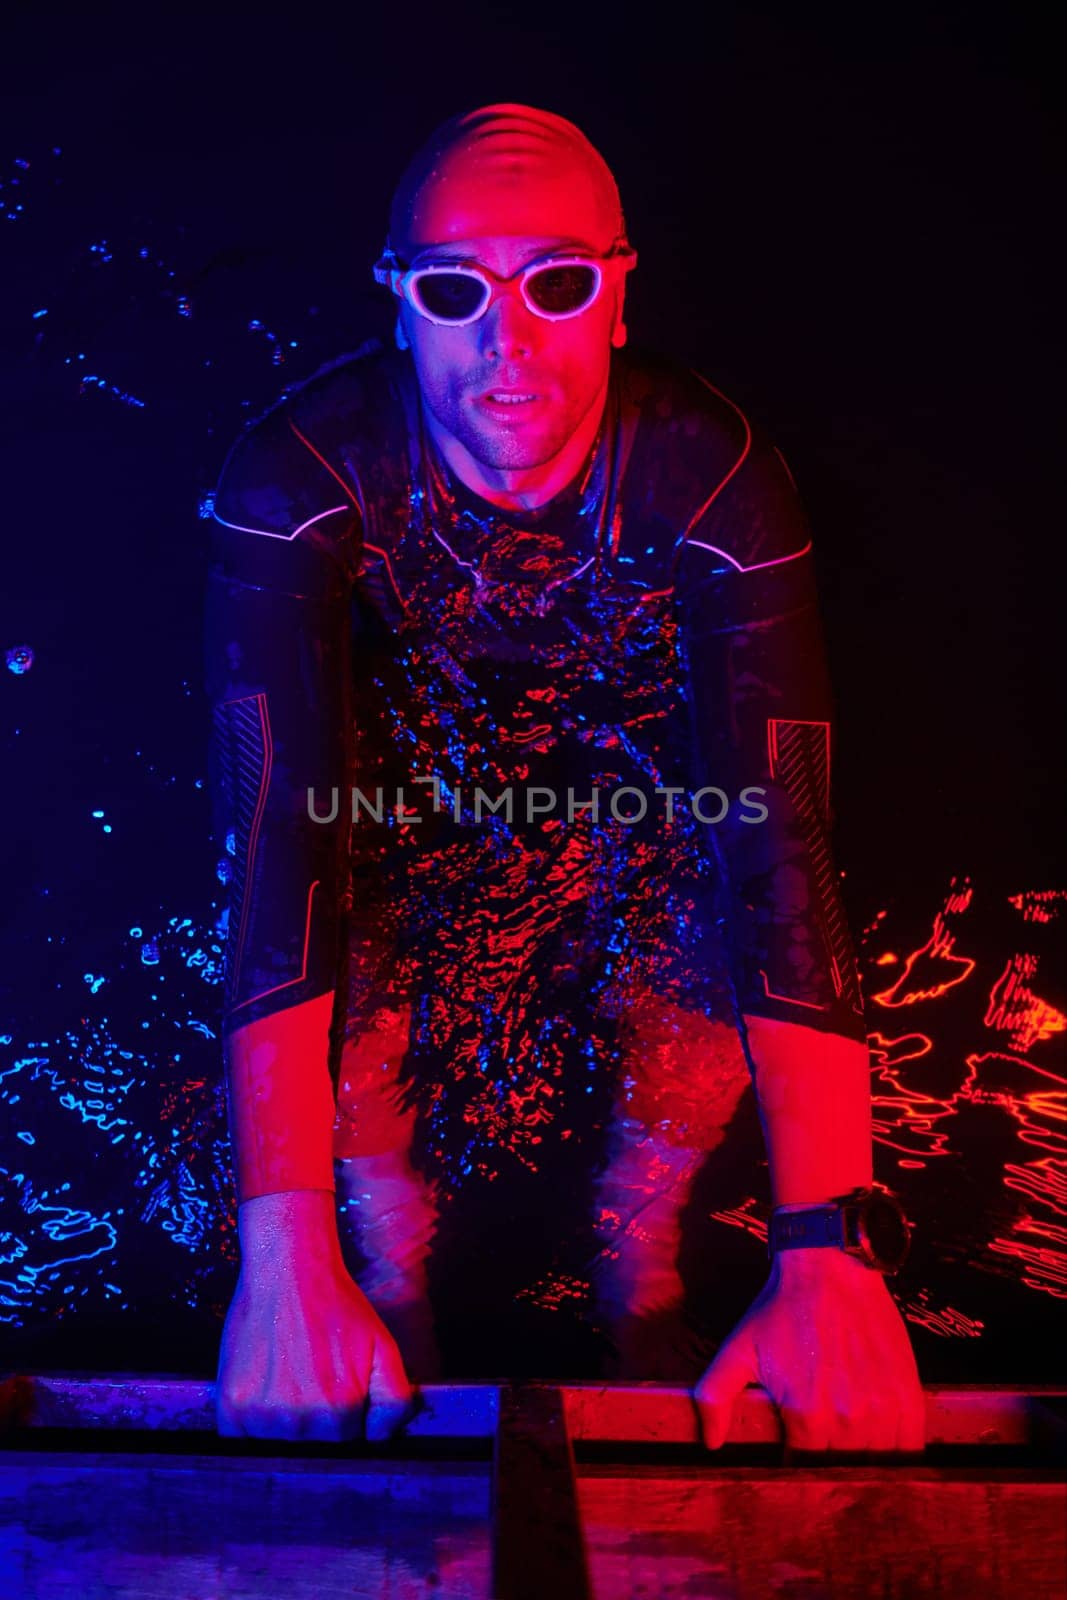 authentic triathlete swimmer having a break during hard training on night neon gel light by dotshock